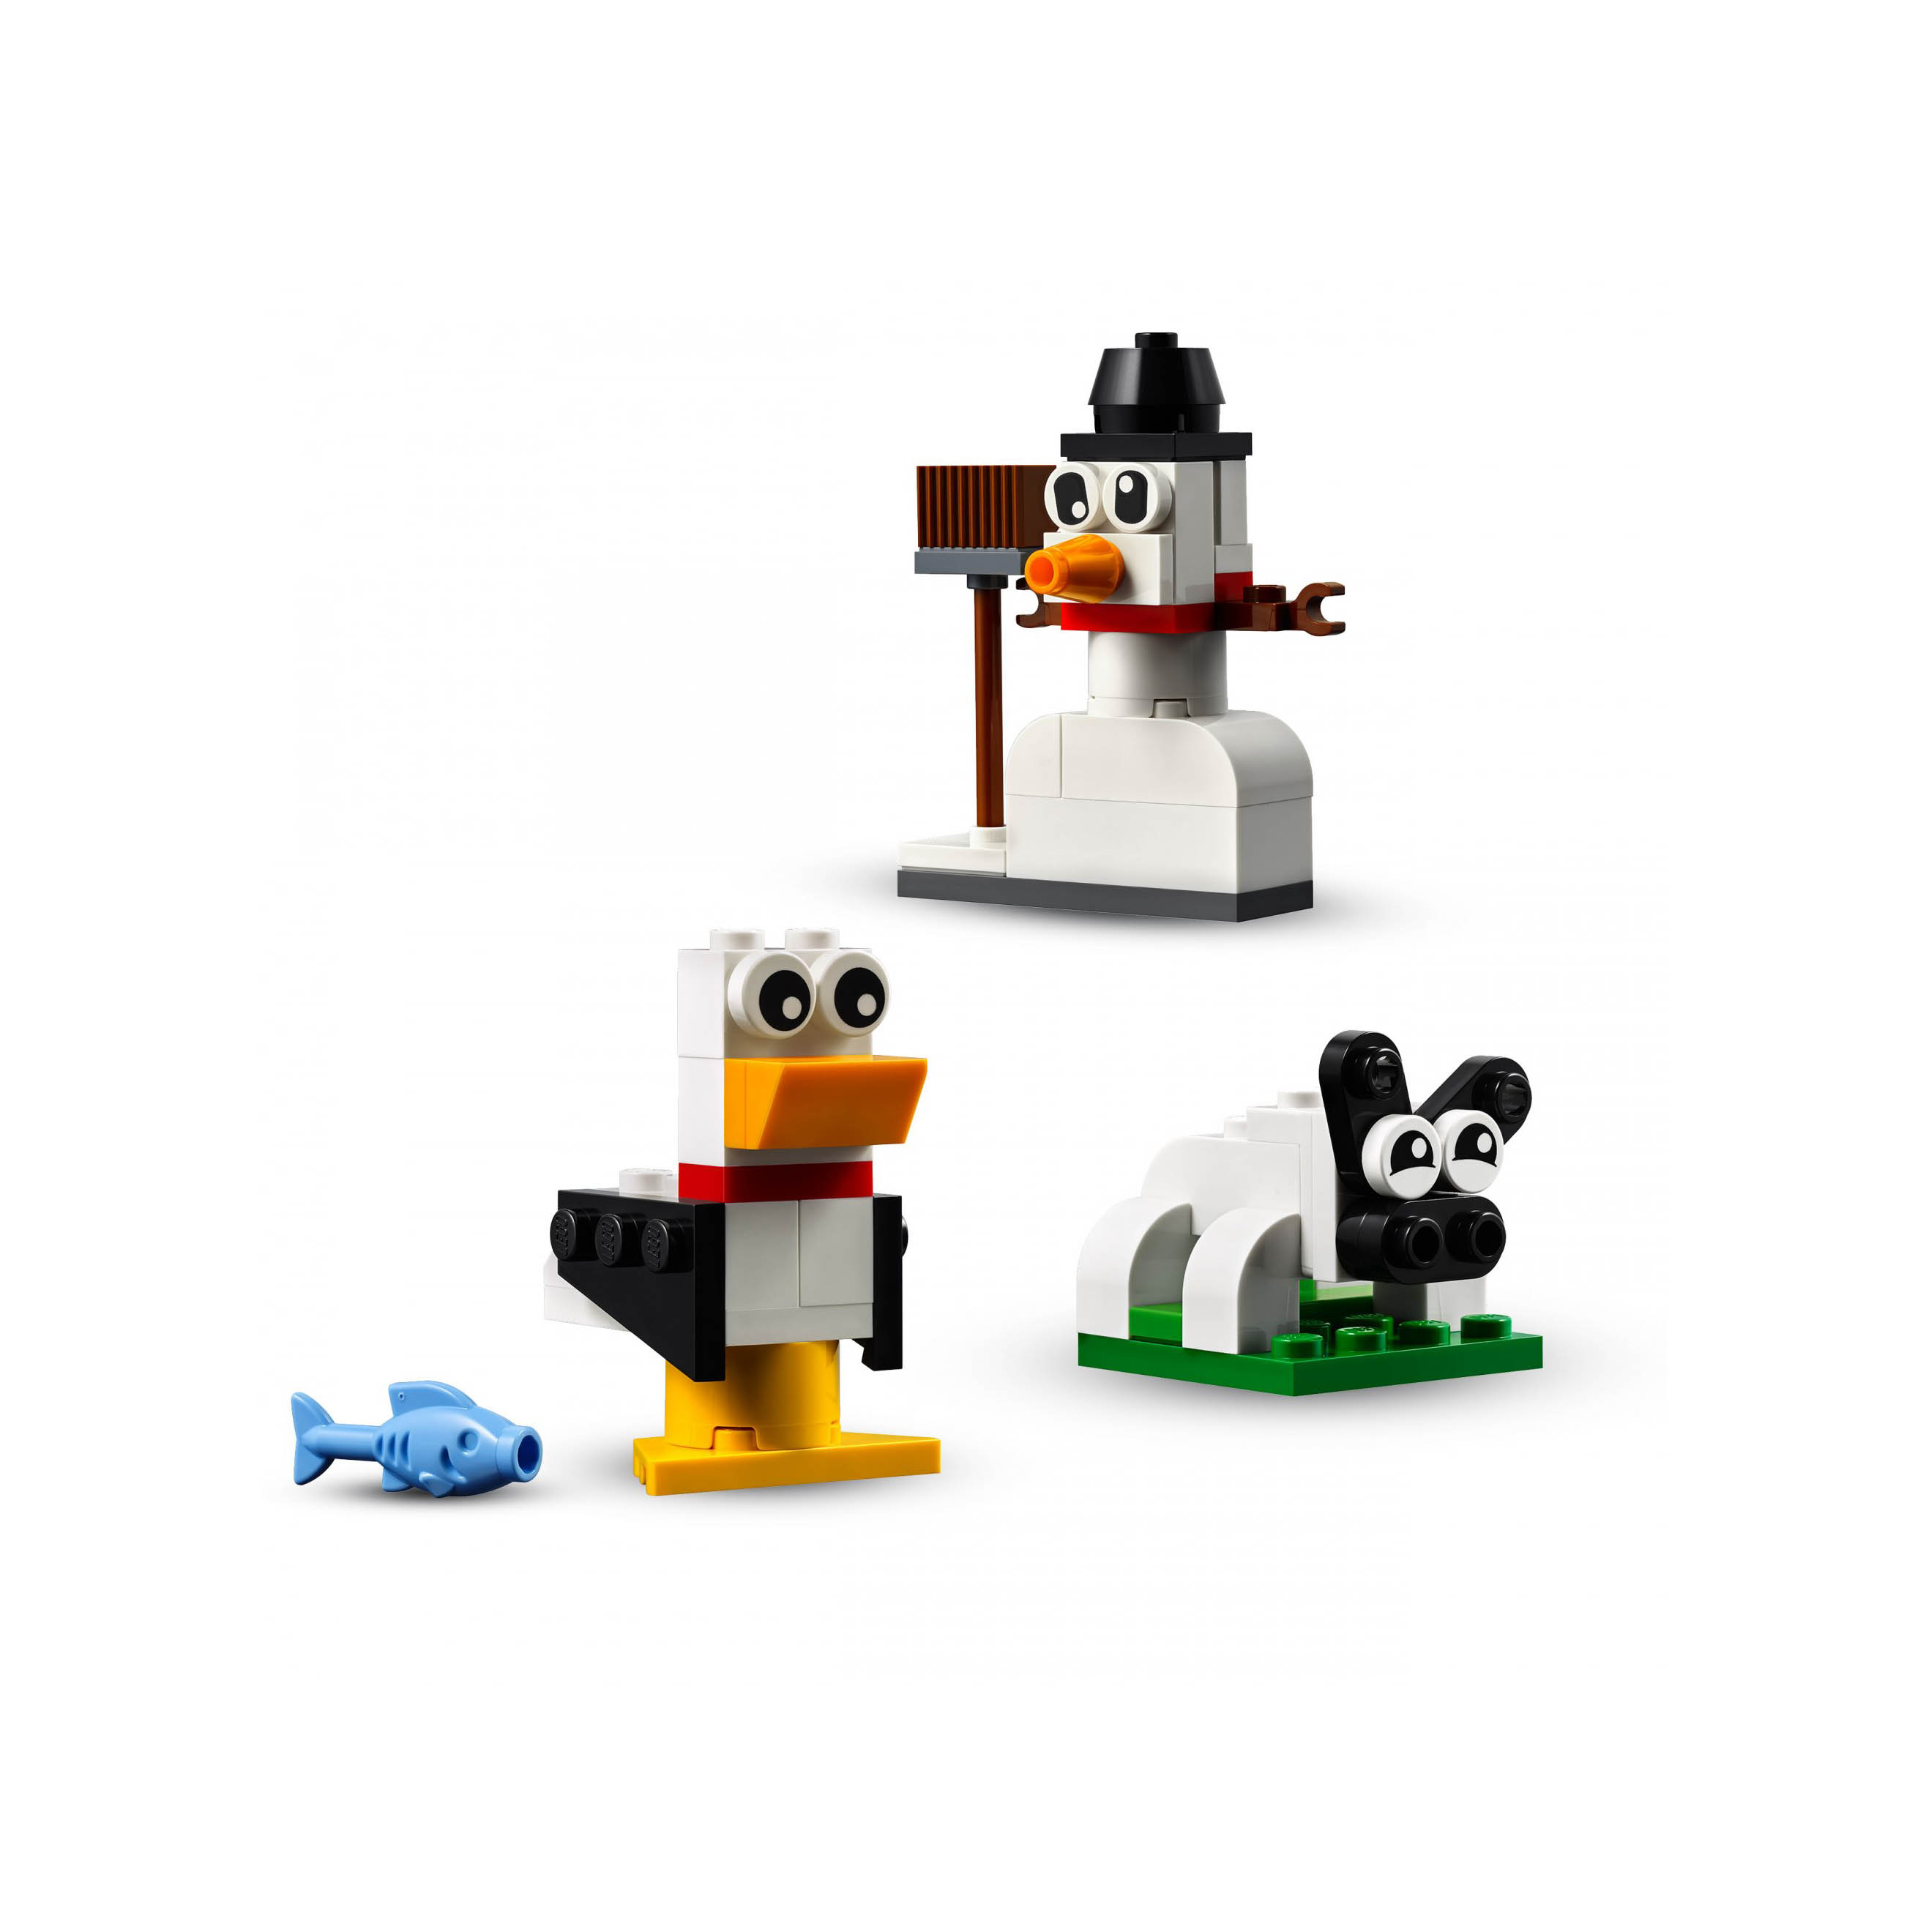 LEGO Classic Mattoncini Bianchi Creativi, Set di Costruzioni per Bambini 4 Anni 11012, , large